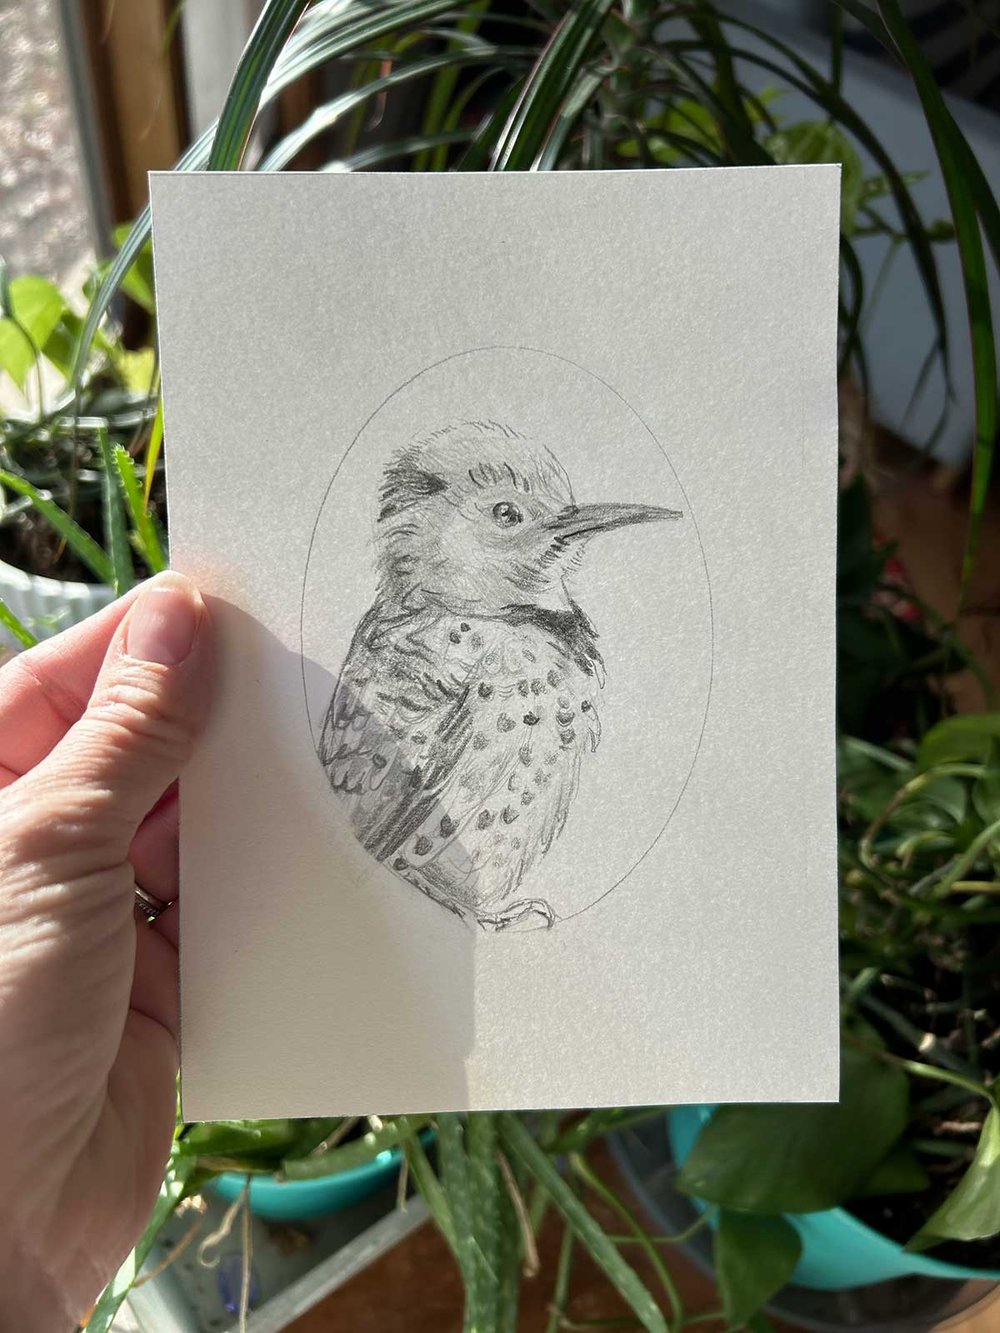 Colaptes auratus – Northern flicker bird drawing